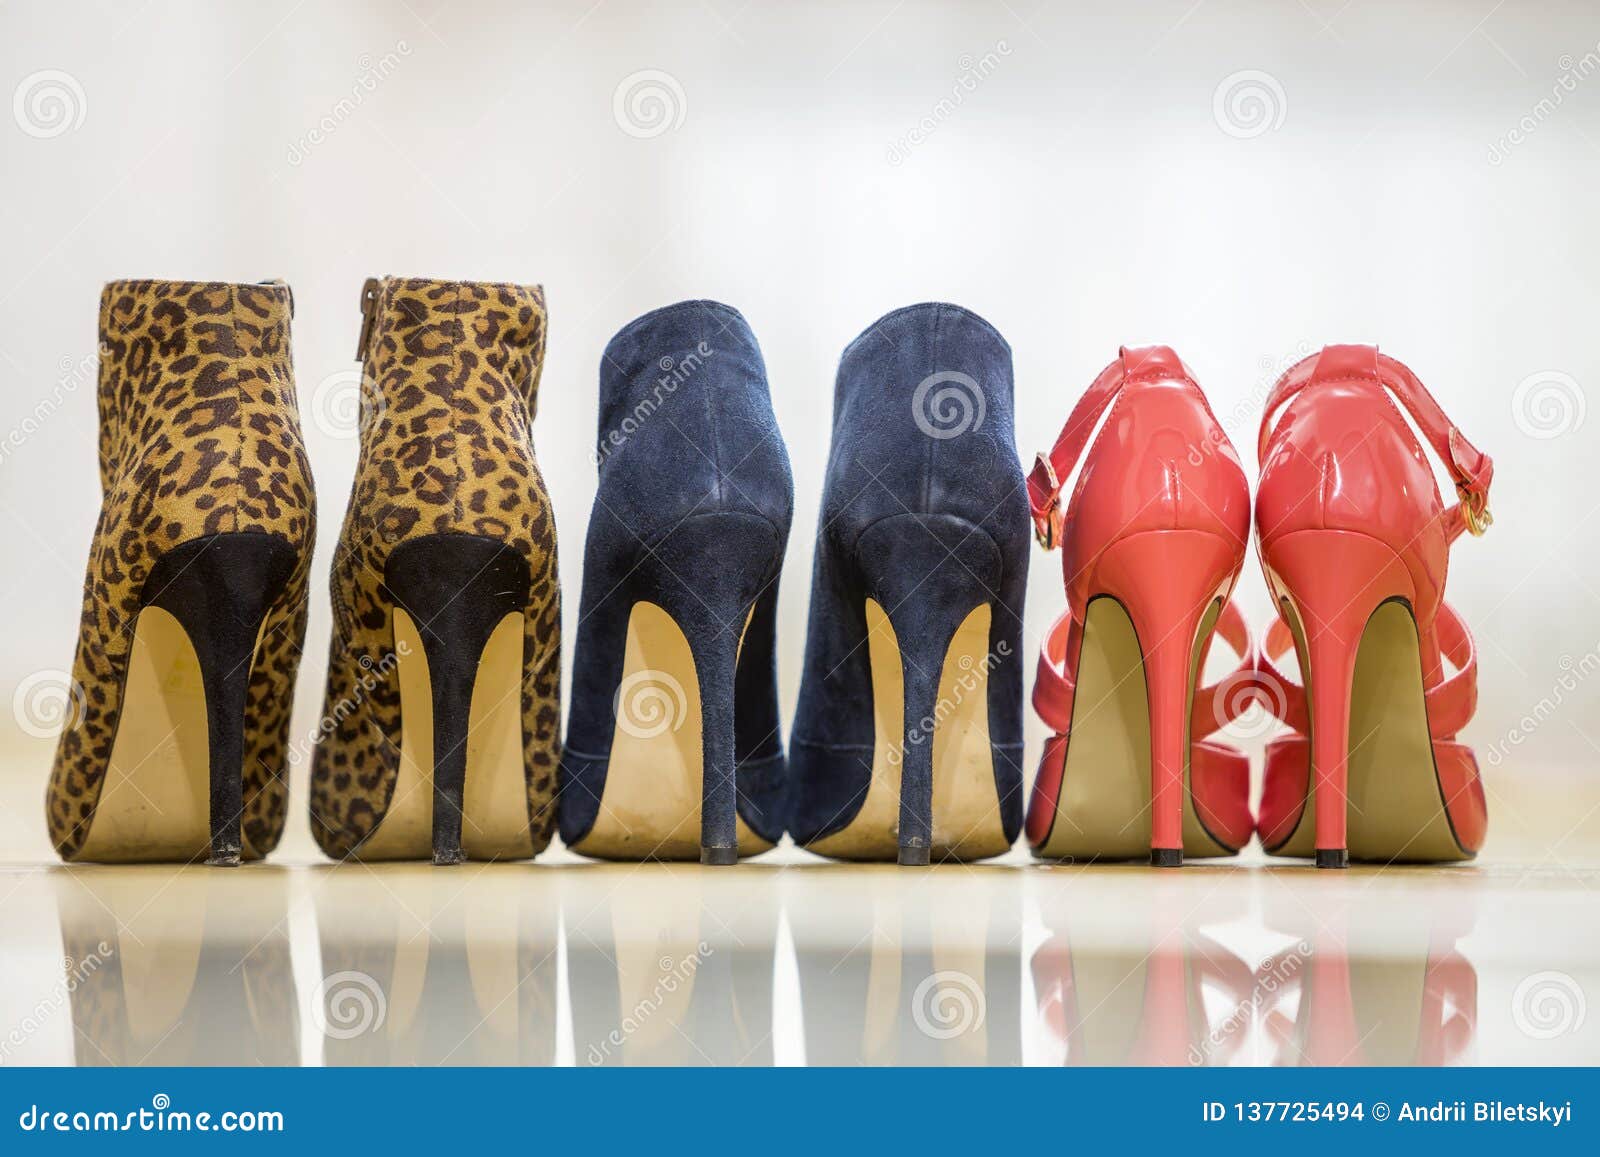 Stylish and comfortable - tips on high heels